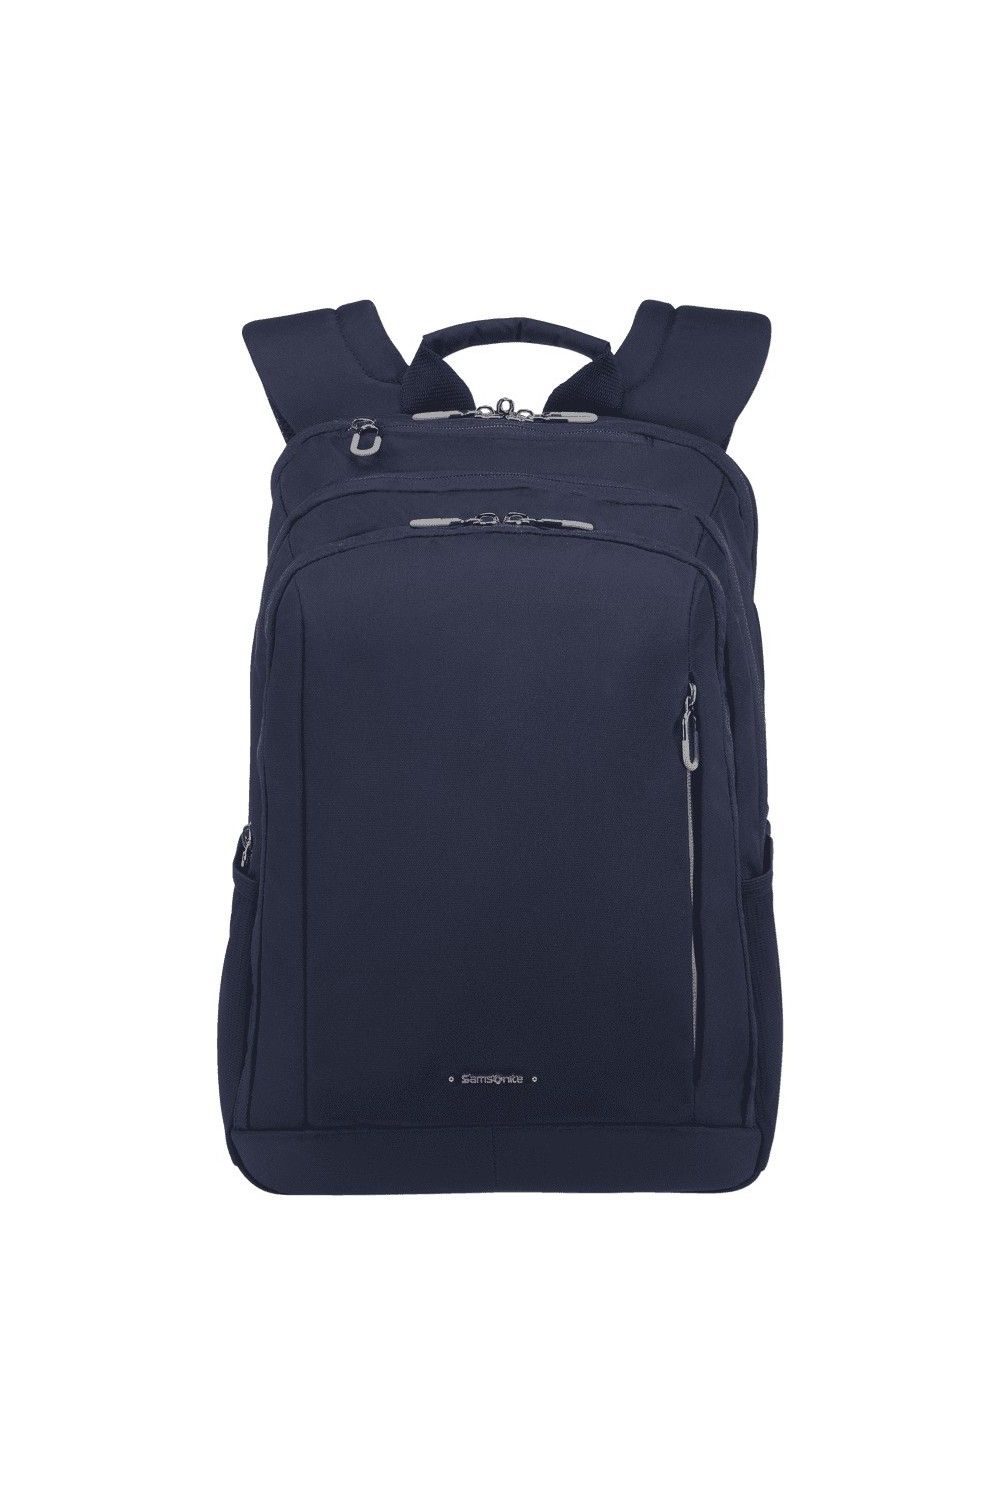 Samsonite Guardit Classy Laptop Backpack 14.1 inches